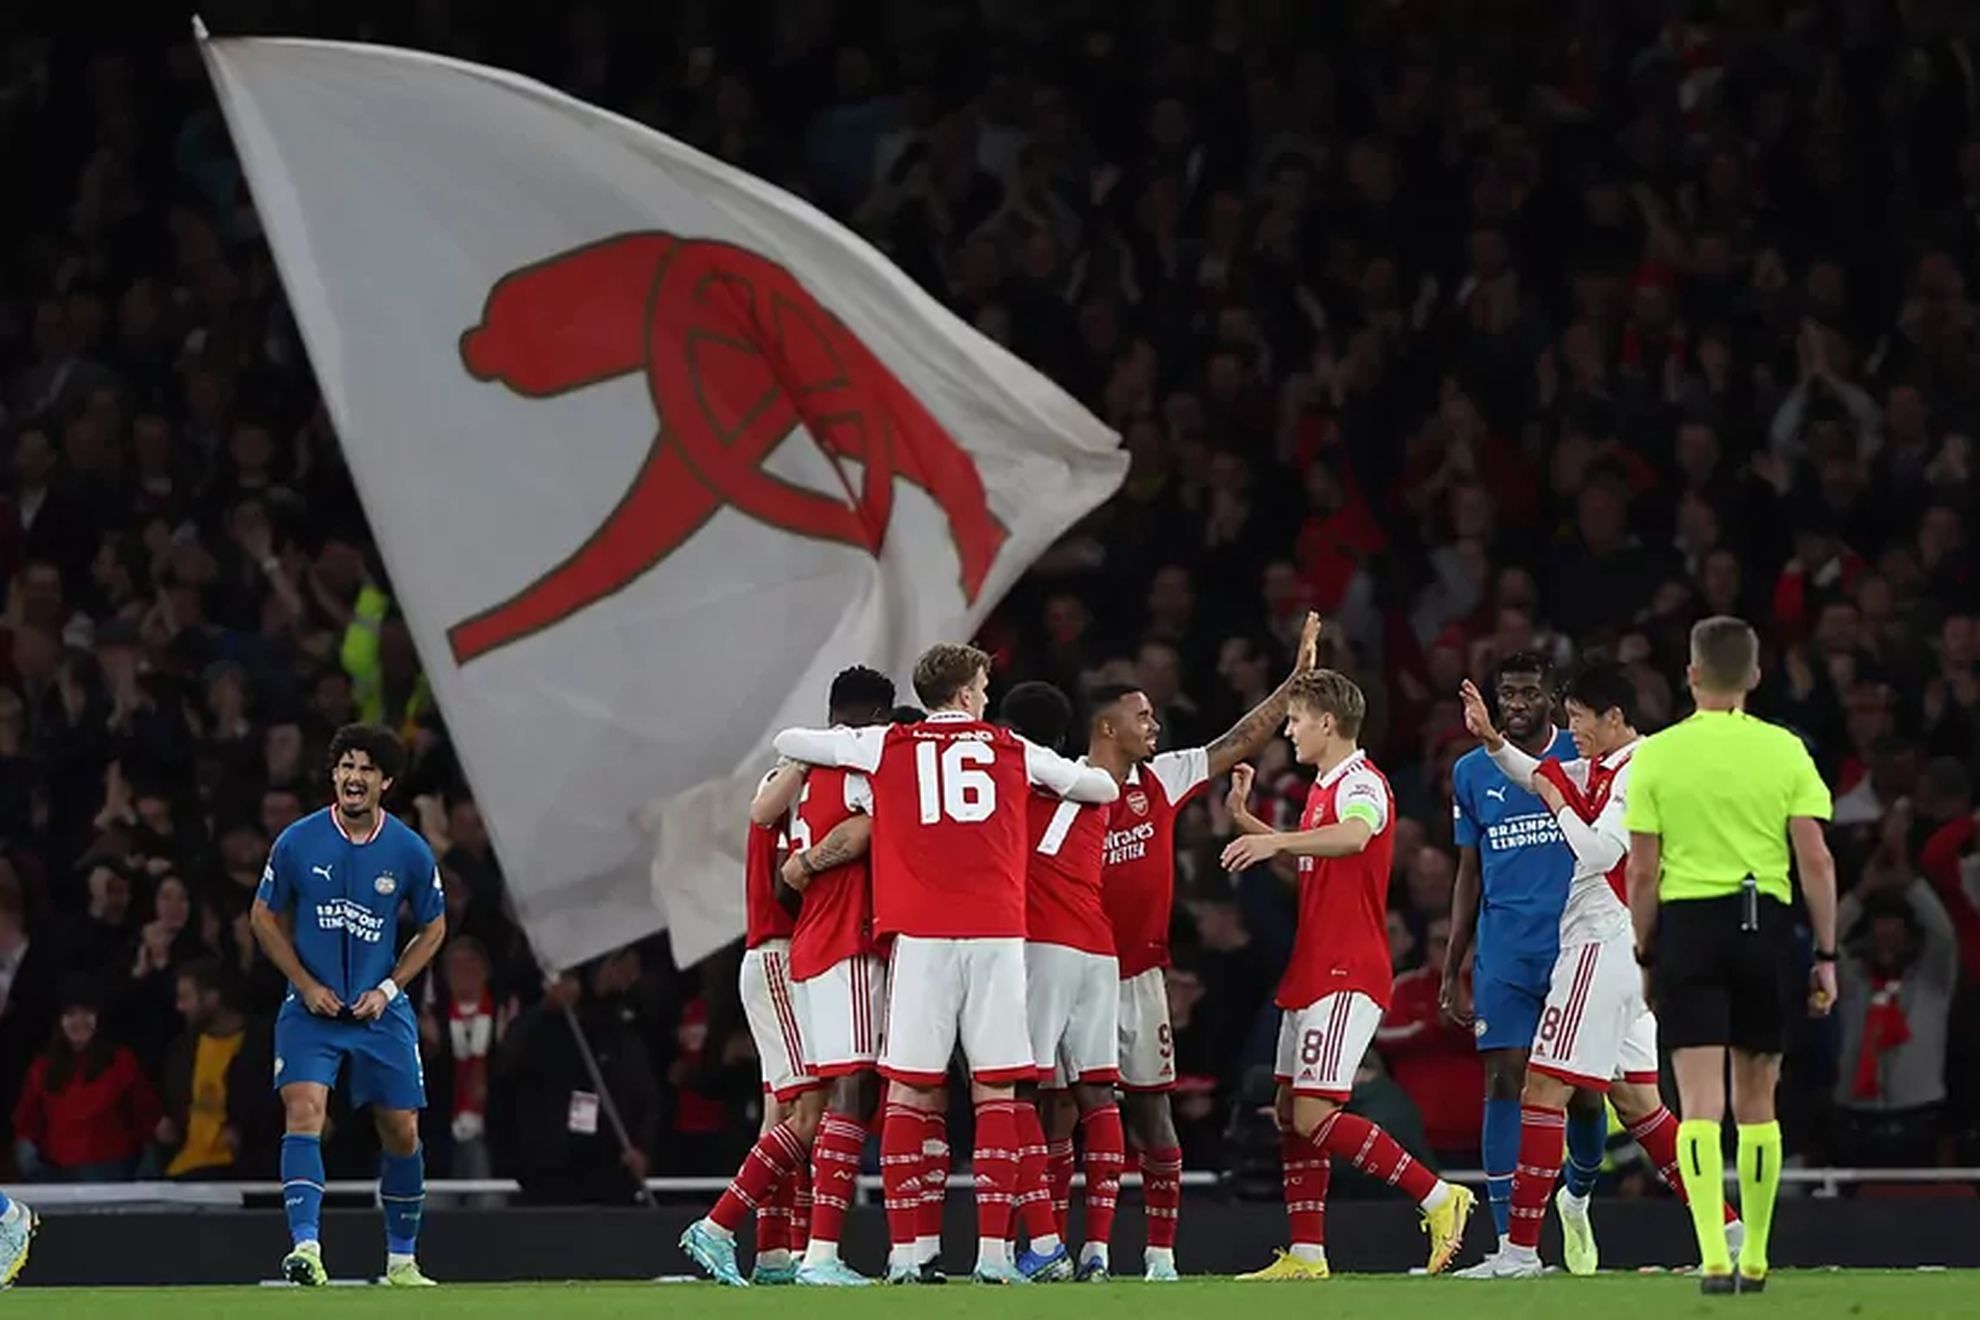 Arsenal celebrate their goal against PSV